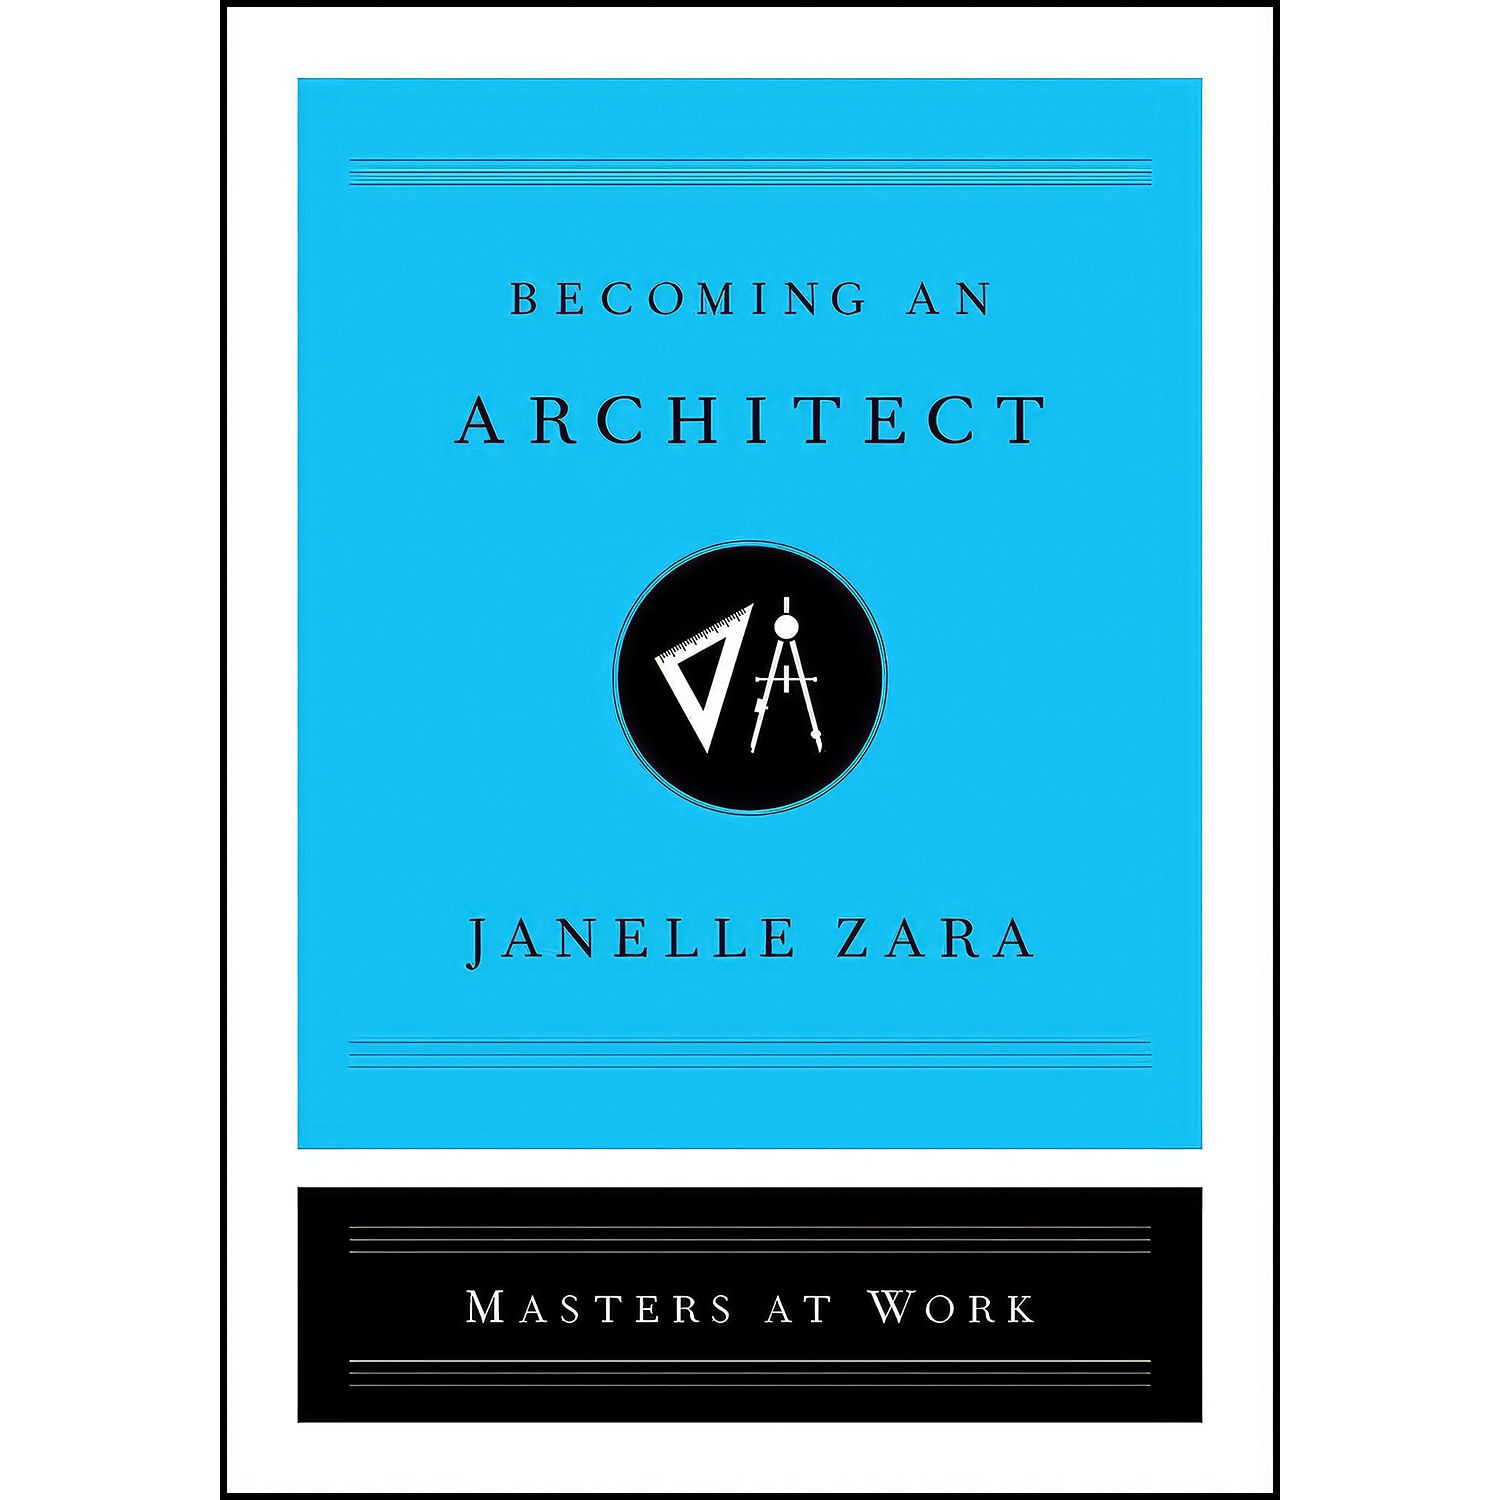 کتاب Becoming an Architect  اثر Janelle Zara انتشارات Simon   Schuster